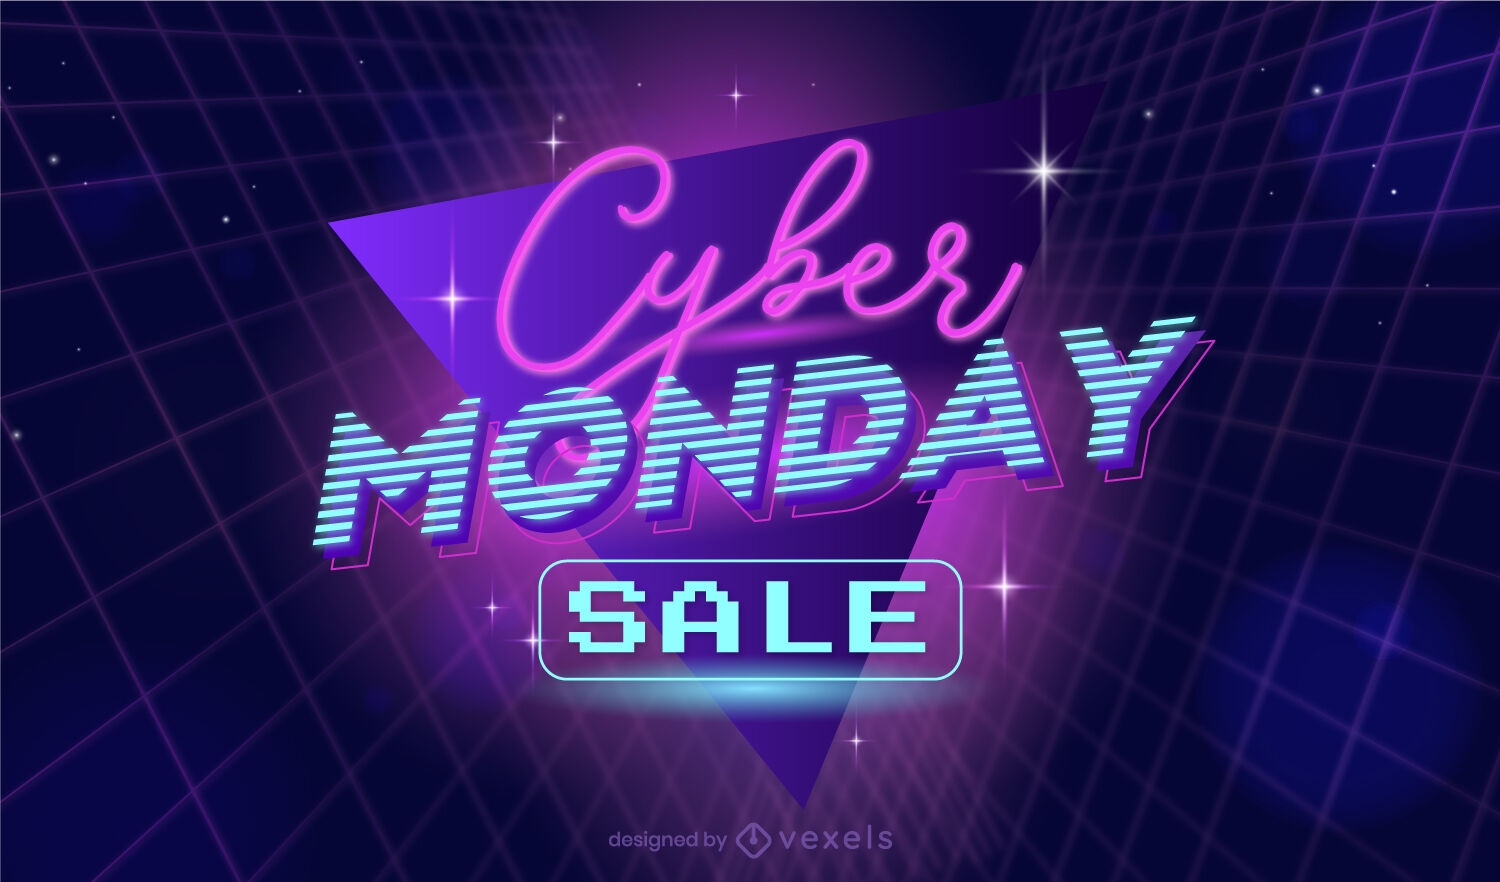 Cyber monday promotion sale neon slider